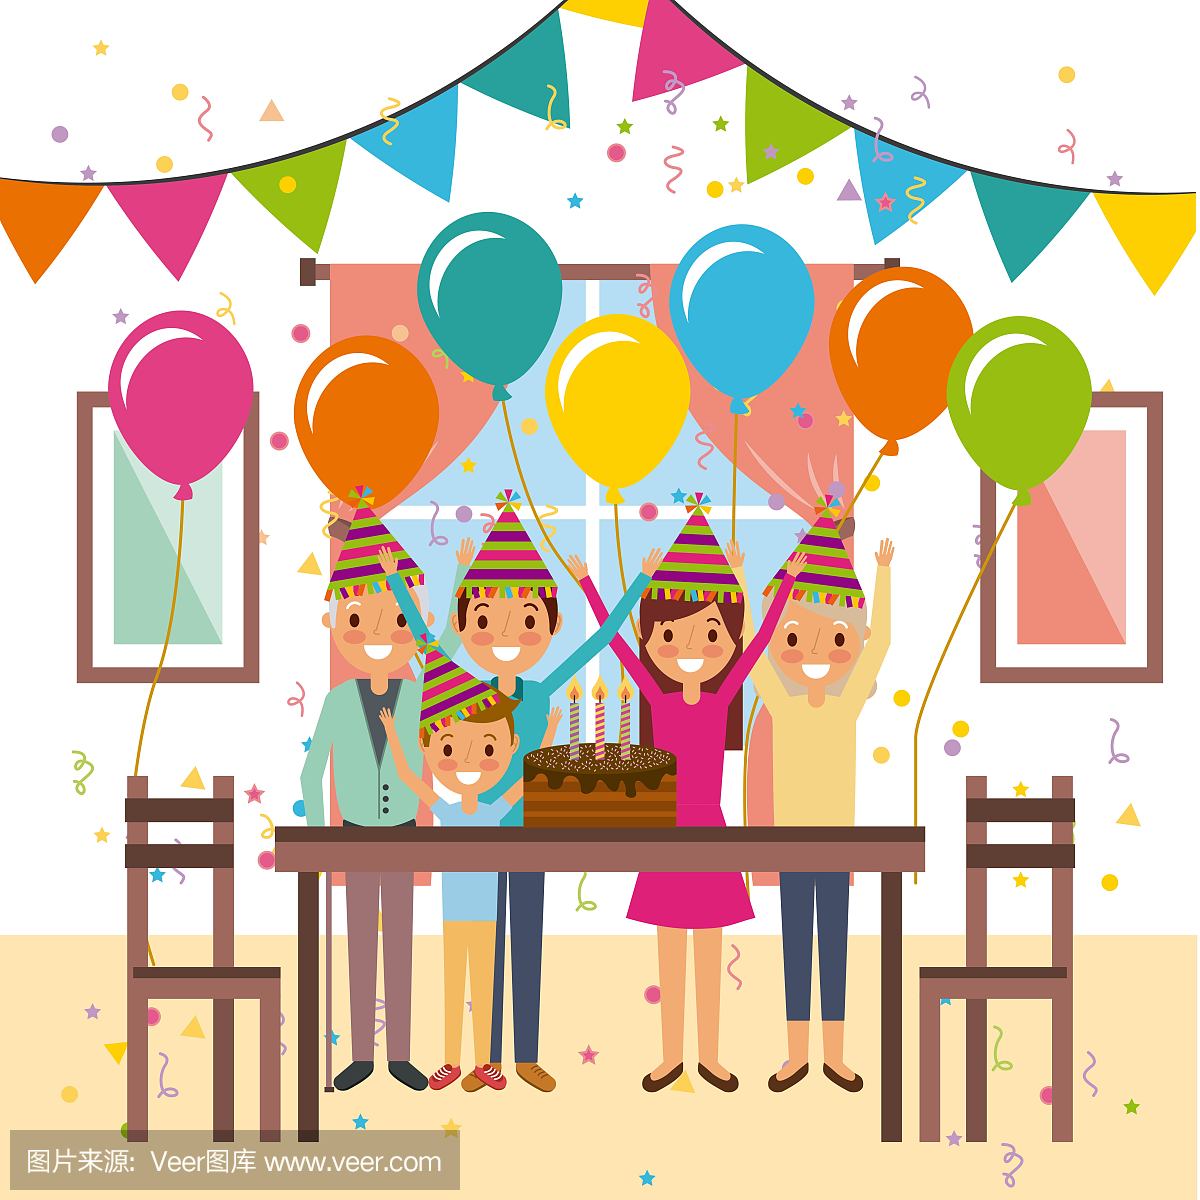 y family celebration birthday cake decoration party